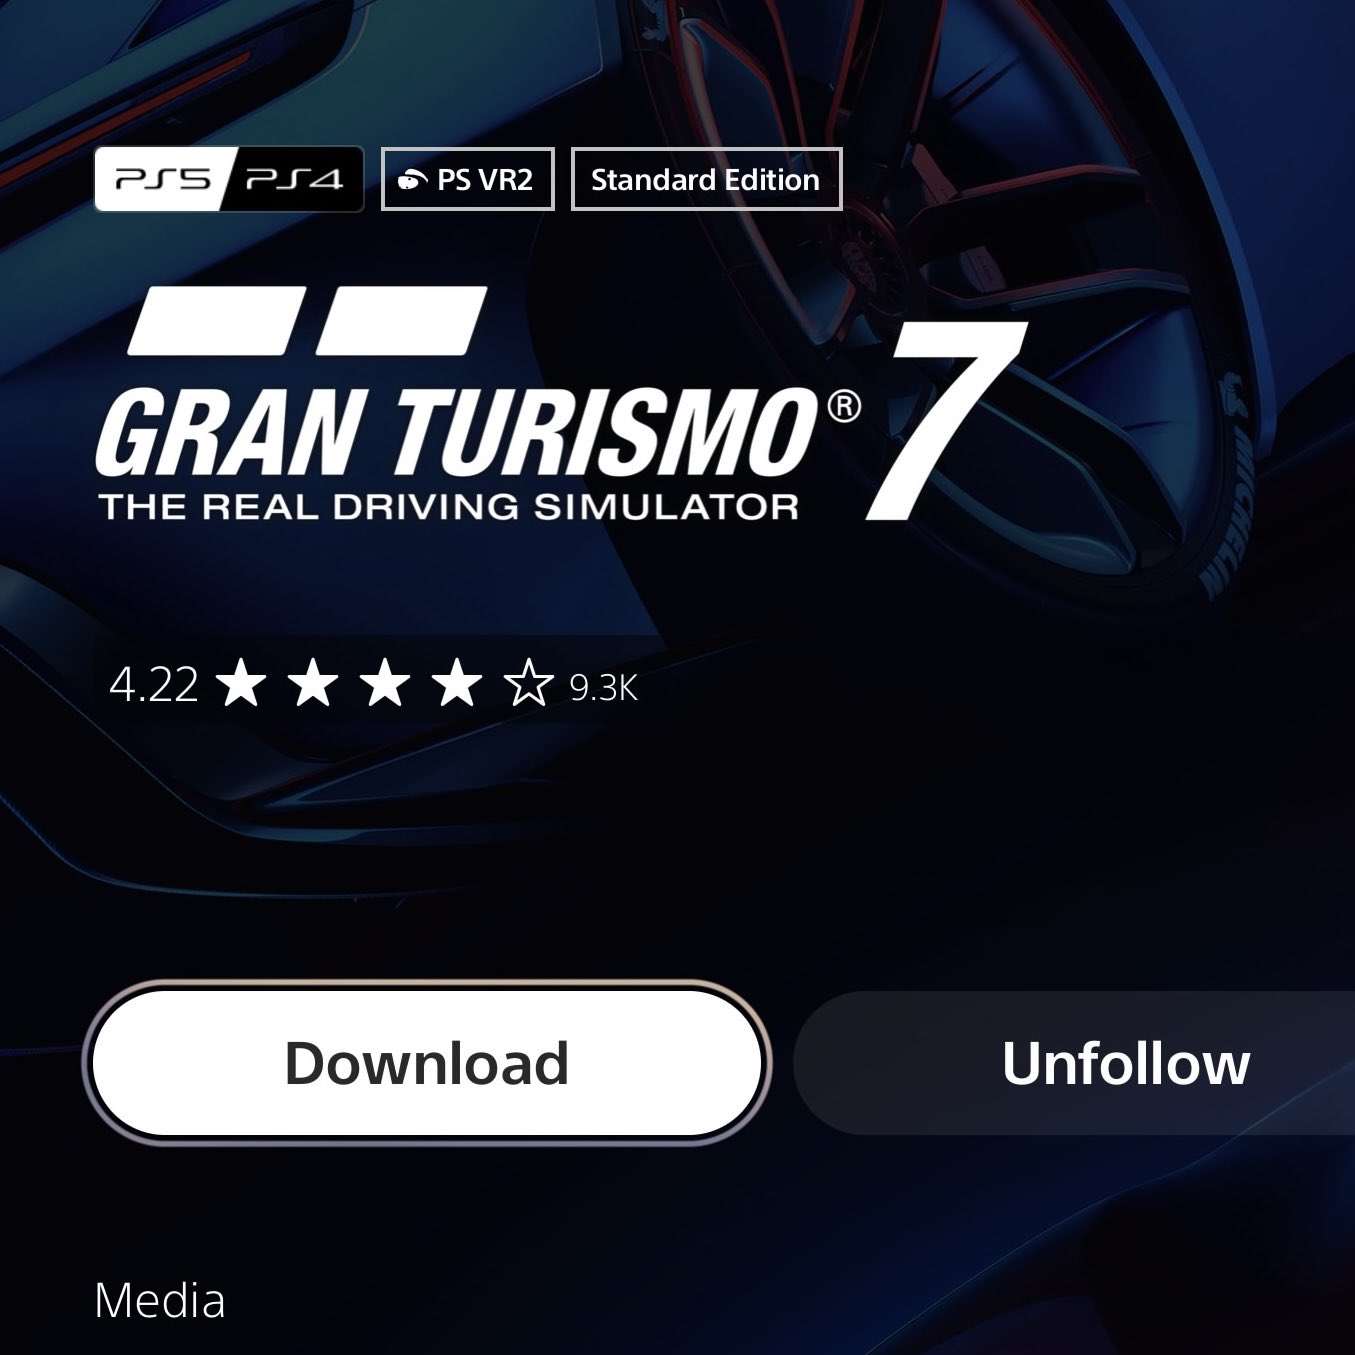 Gran Turismo 7 User Score Drops Below 2.0 On Metacritic 